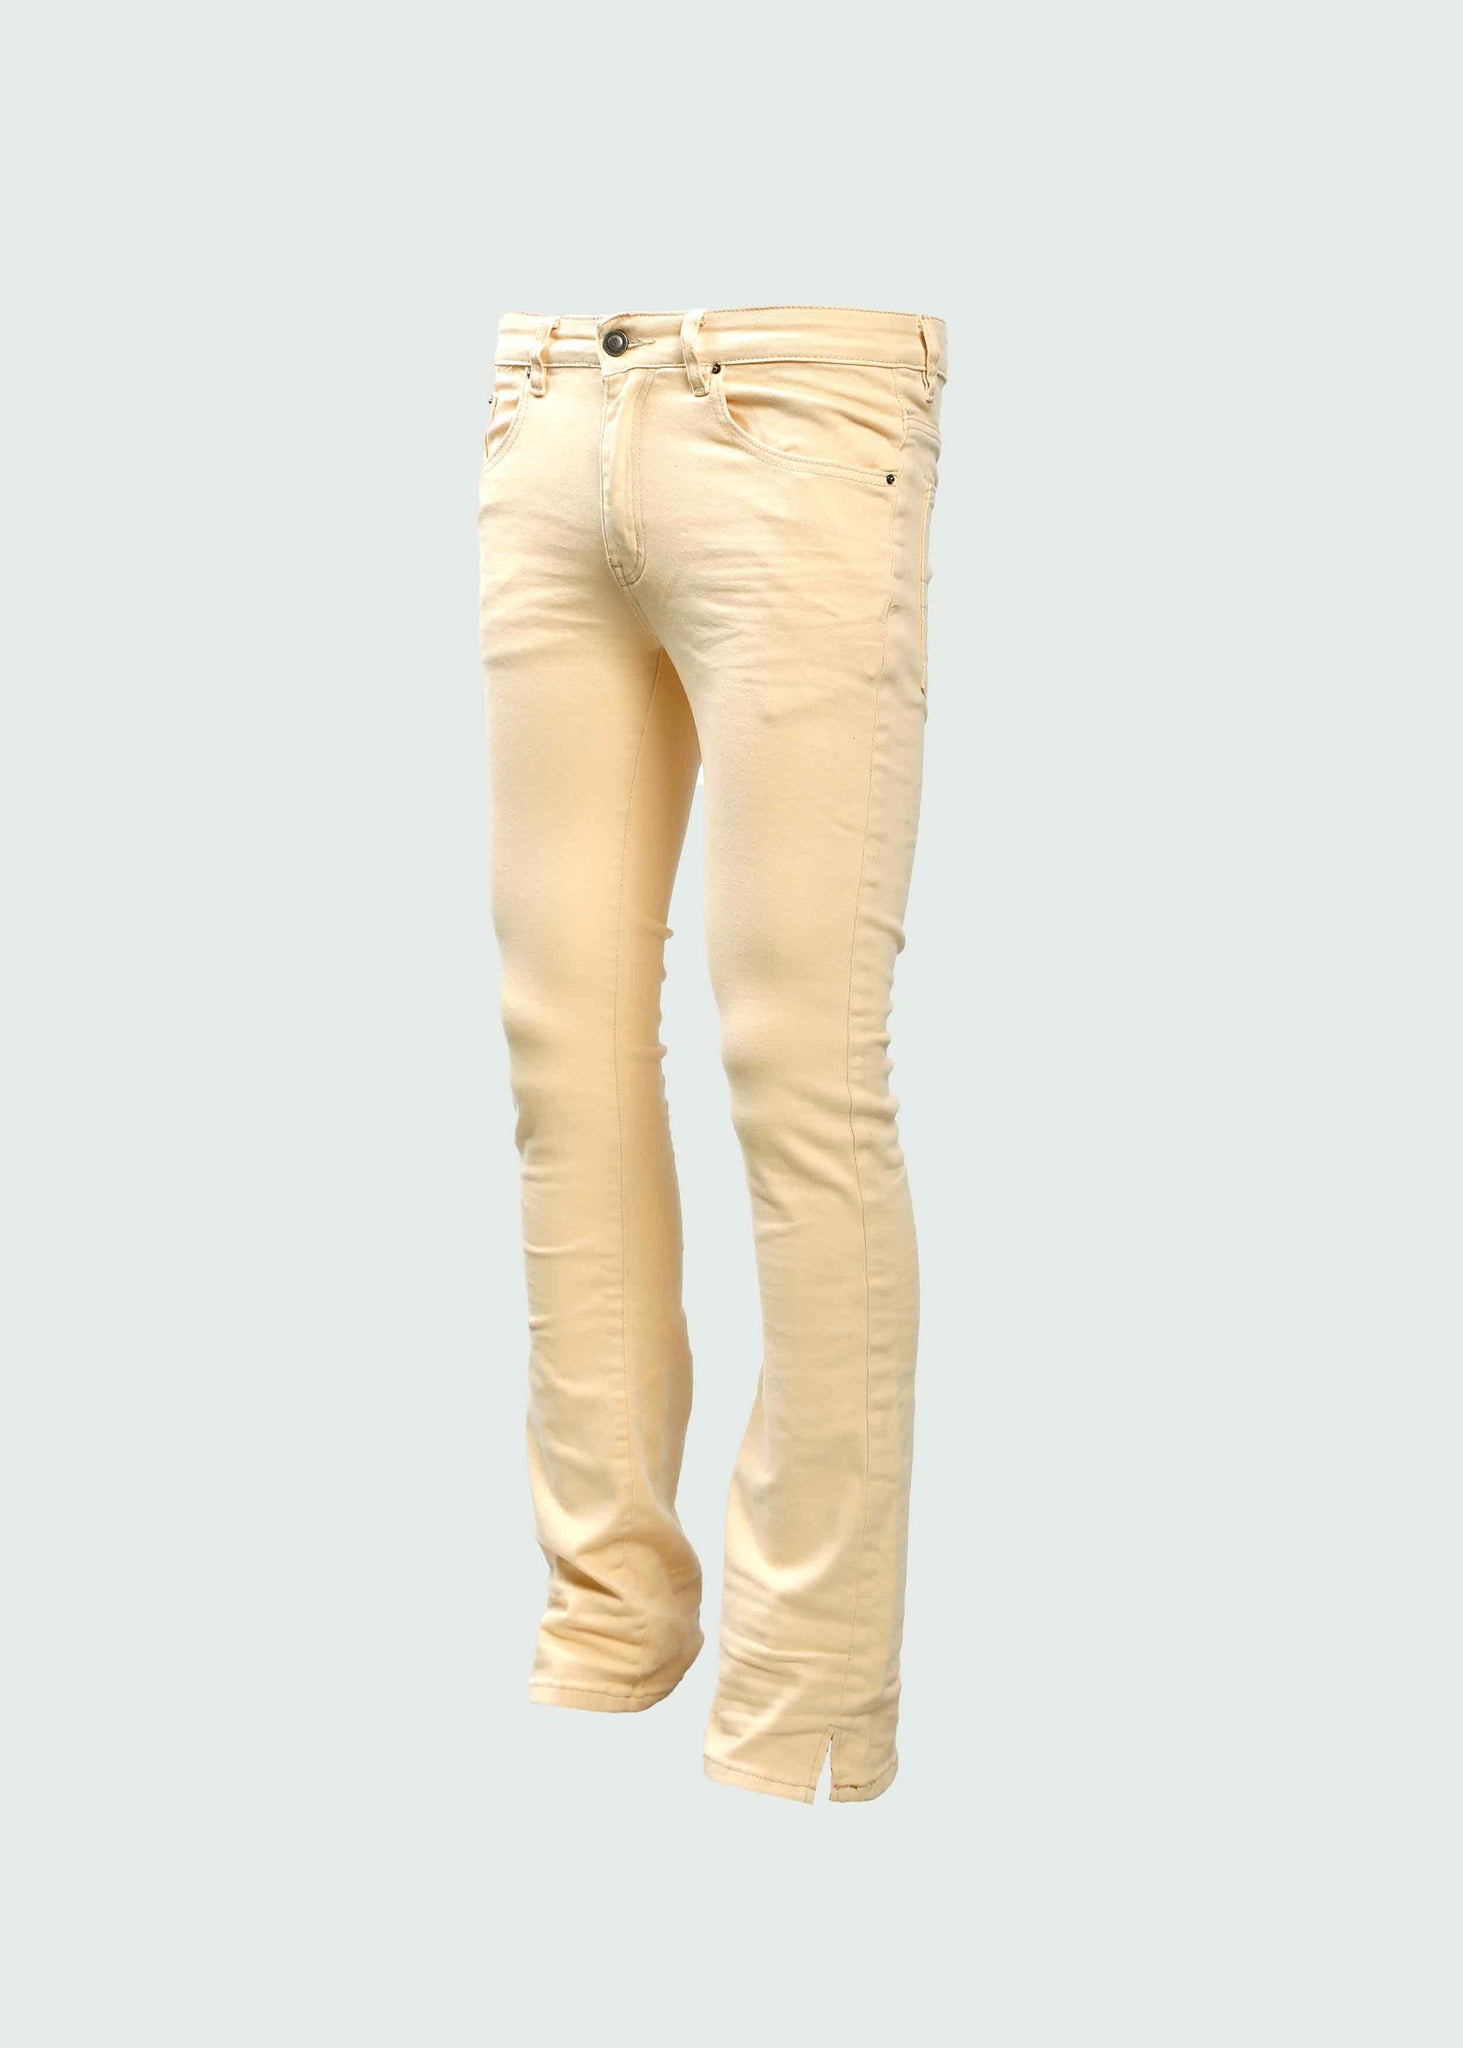 American Eagle Jeans mens Size 14 Tan Khaki Super Stretch Denim High Rise |  eBay